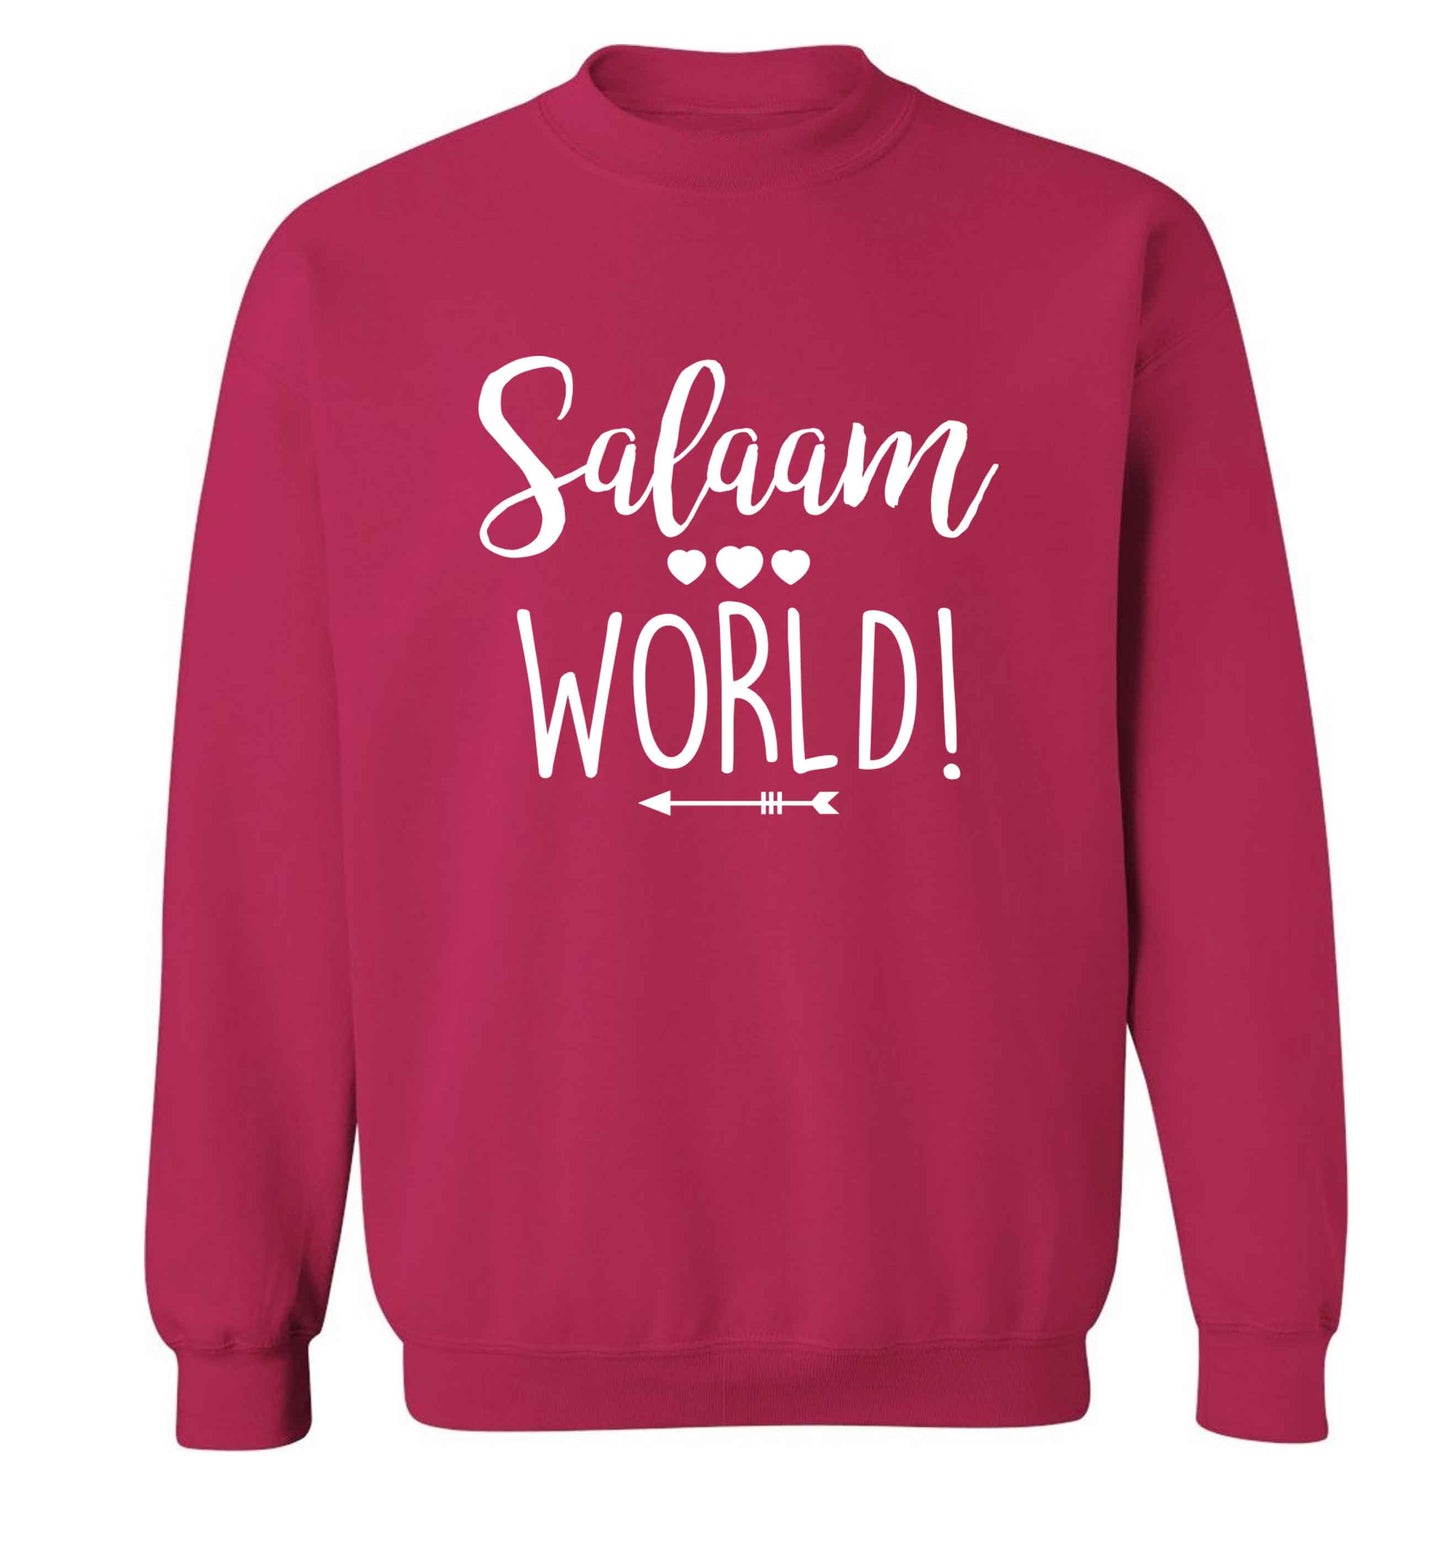 Salaam world adult's unisex pink sweater 2XL